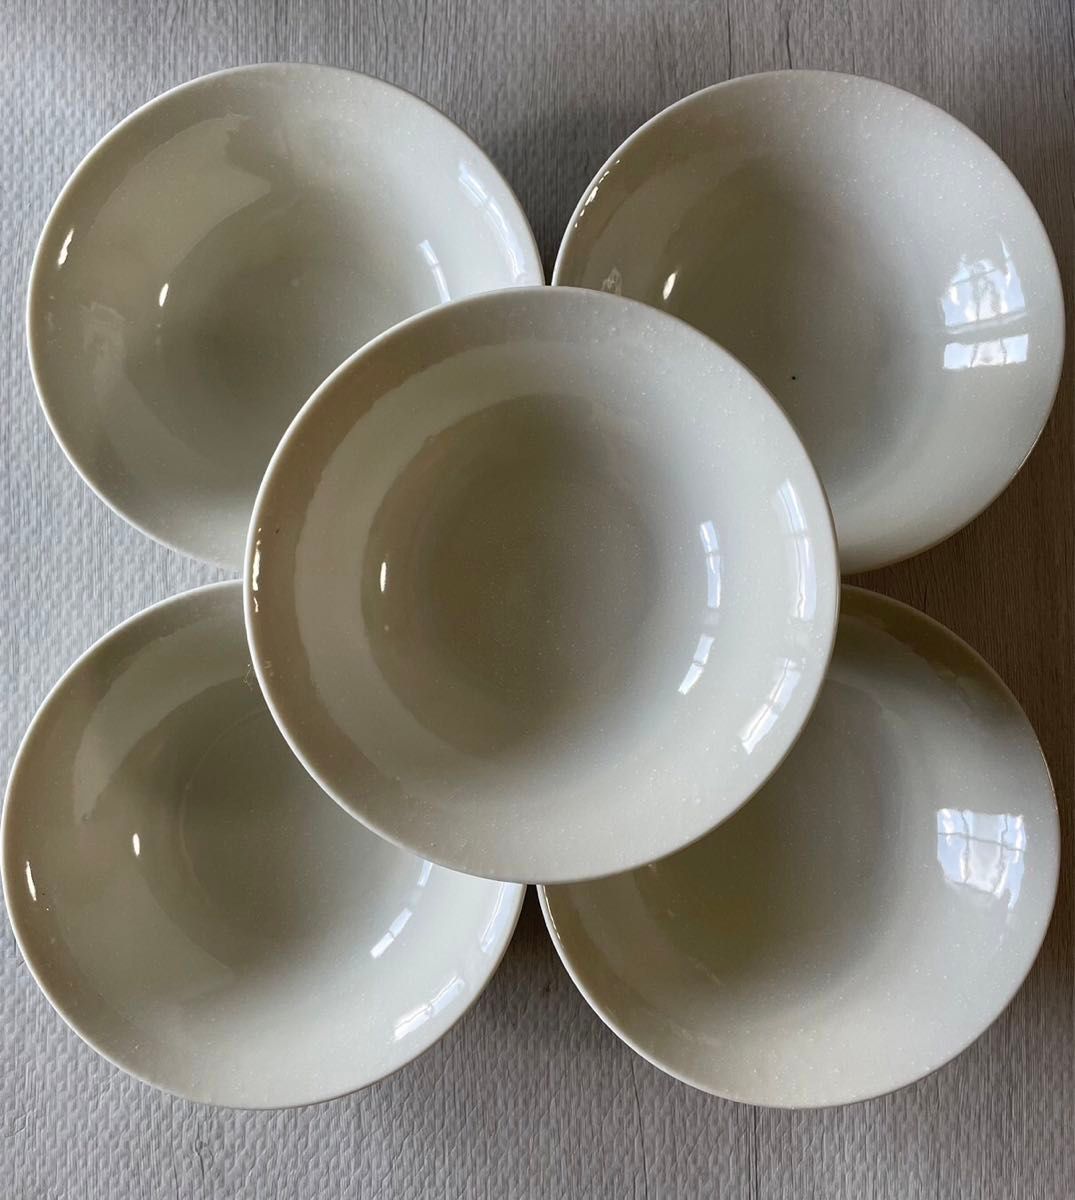 美濃焼 日本製 新品未使用 陶磁器 丸形皿 薄皿 ホワイト 5点セット 17cm